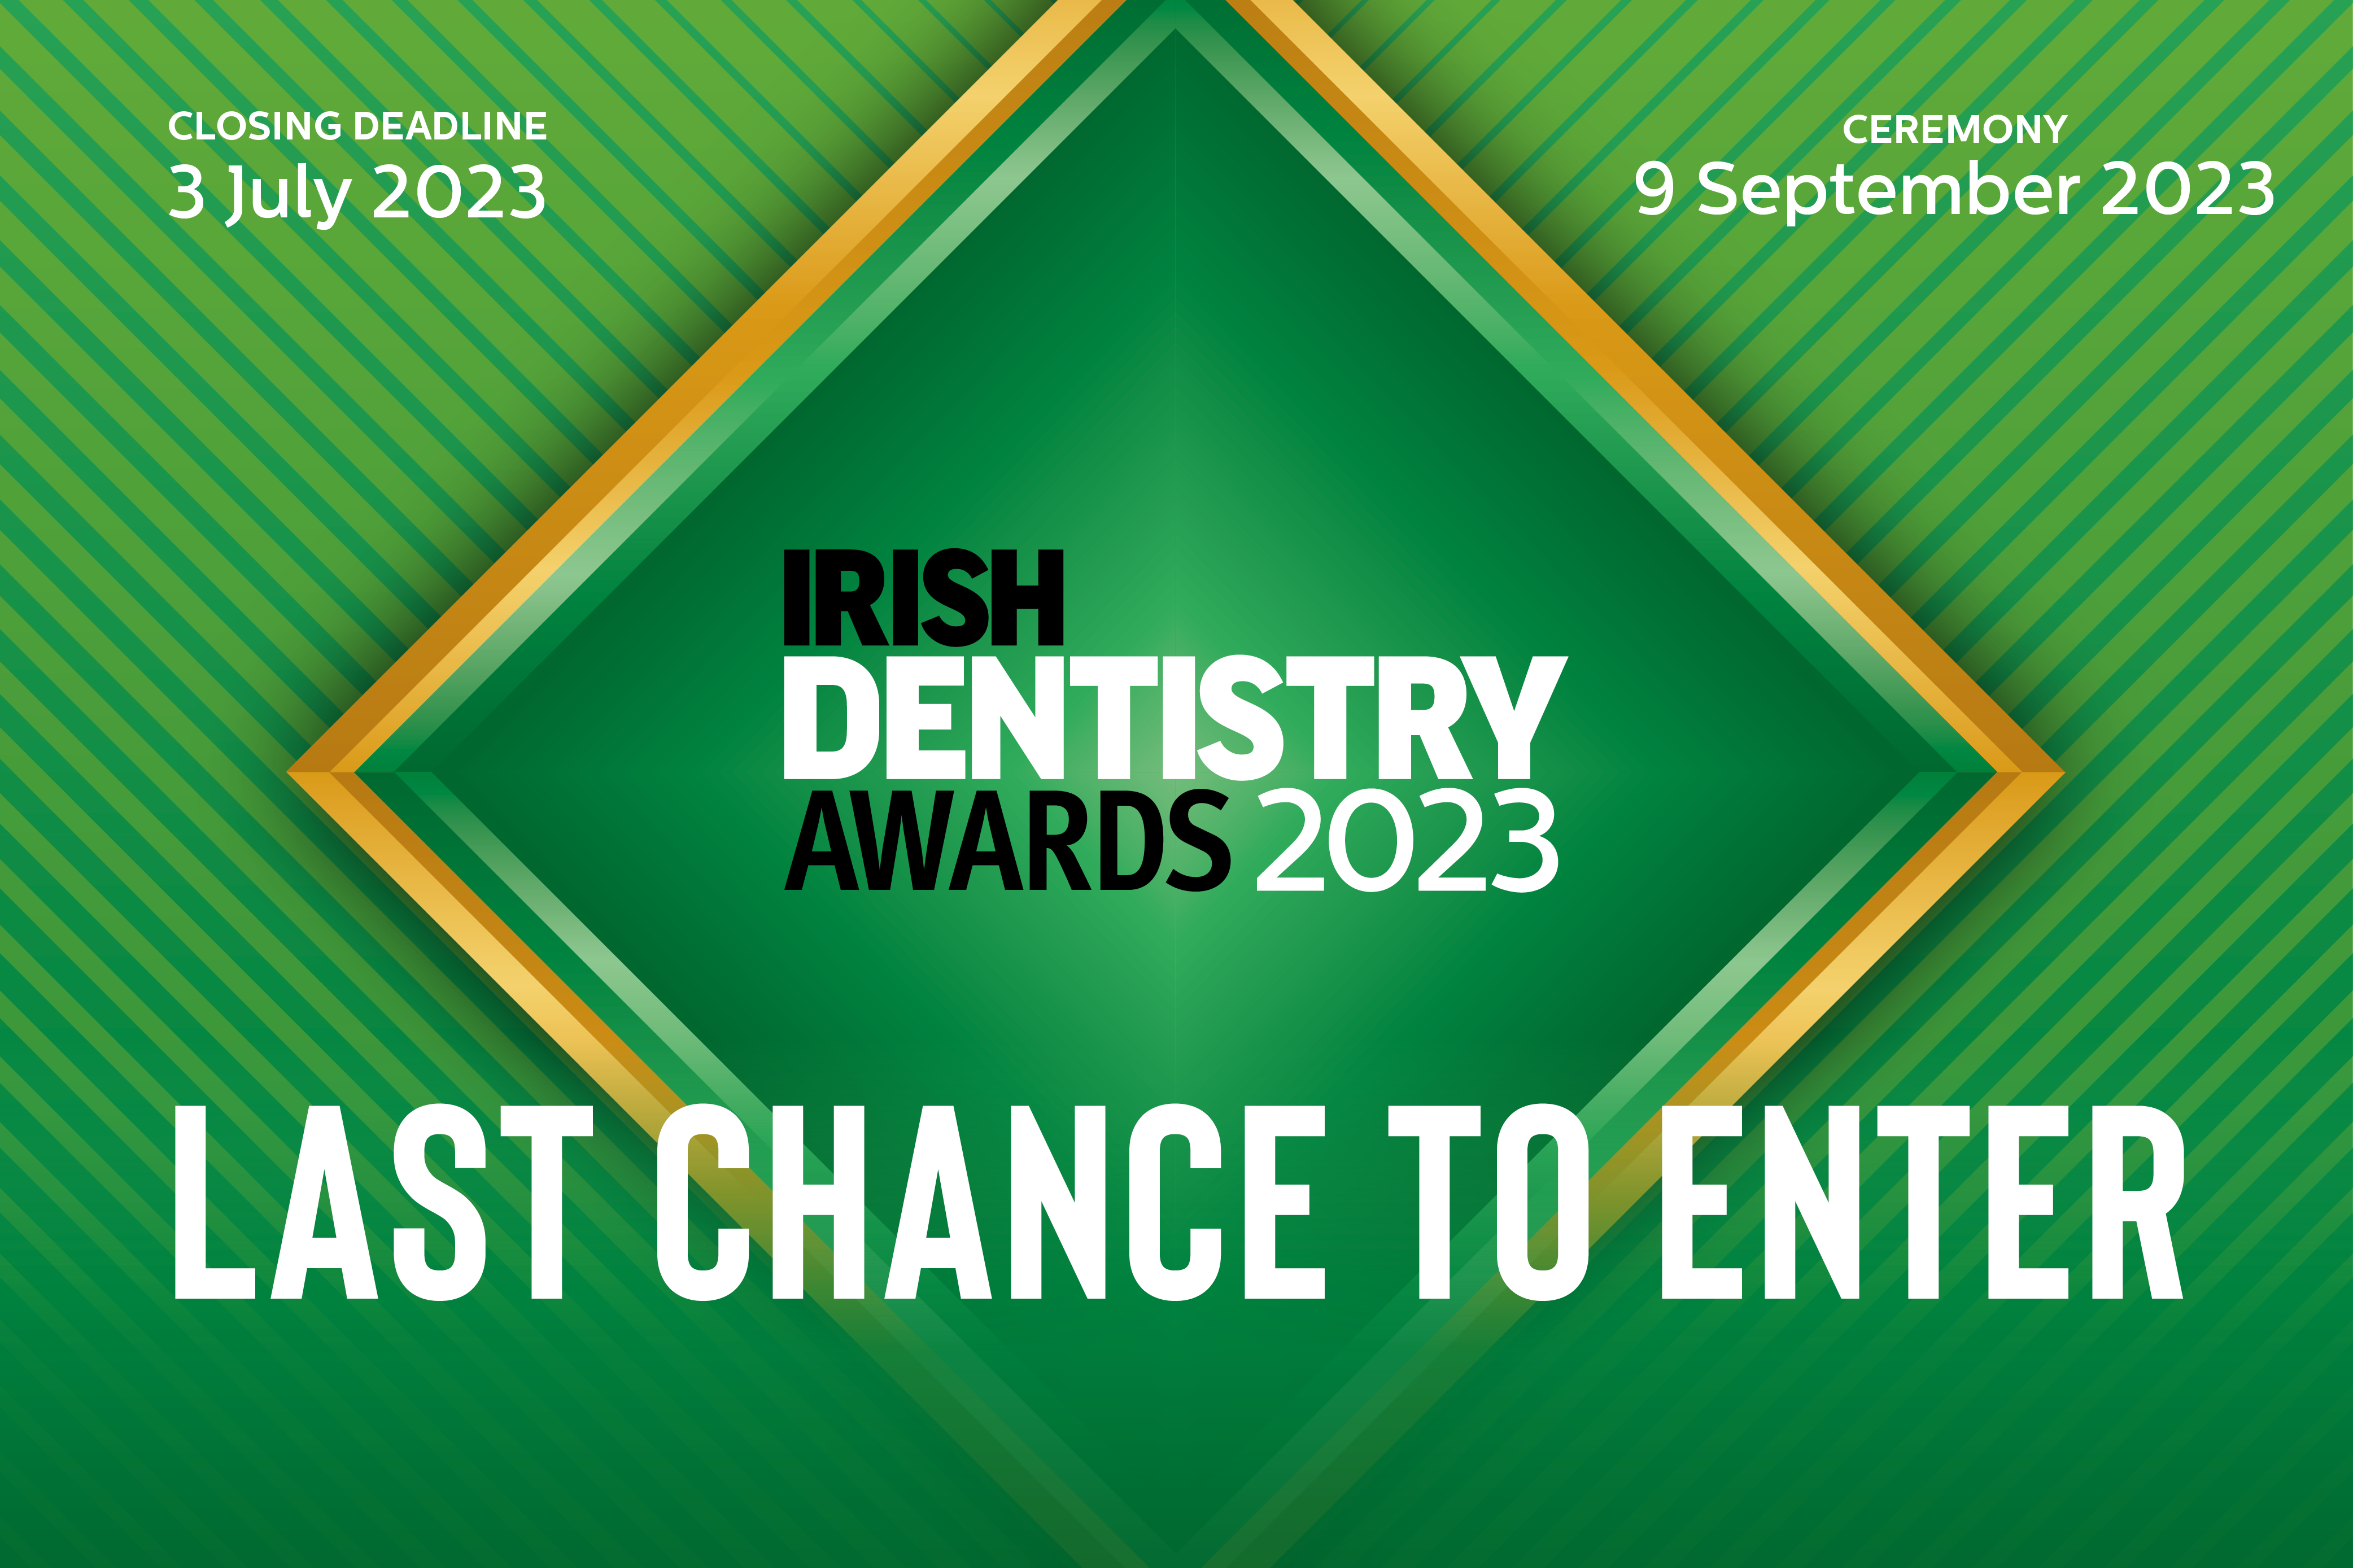 Last chance to enter the Irish Dentistry Awards